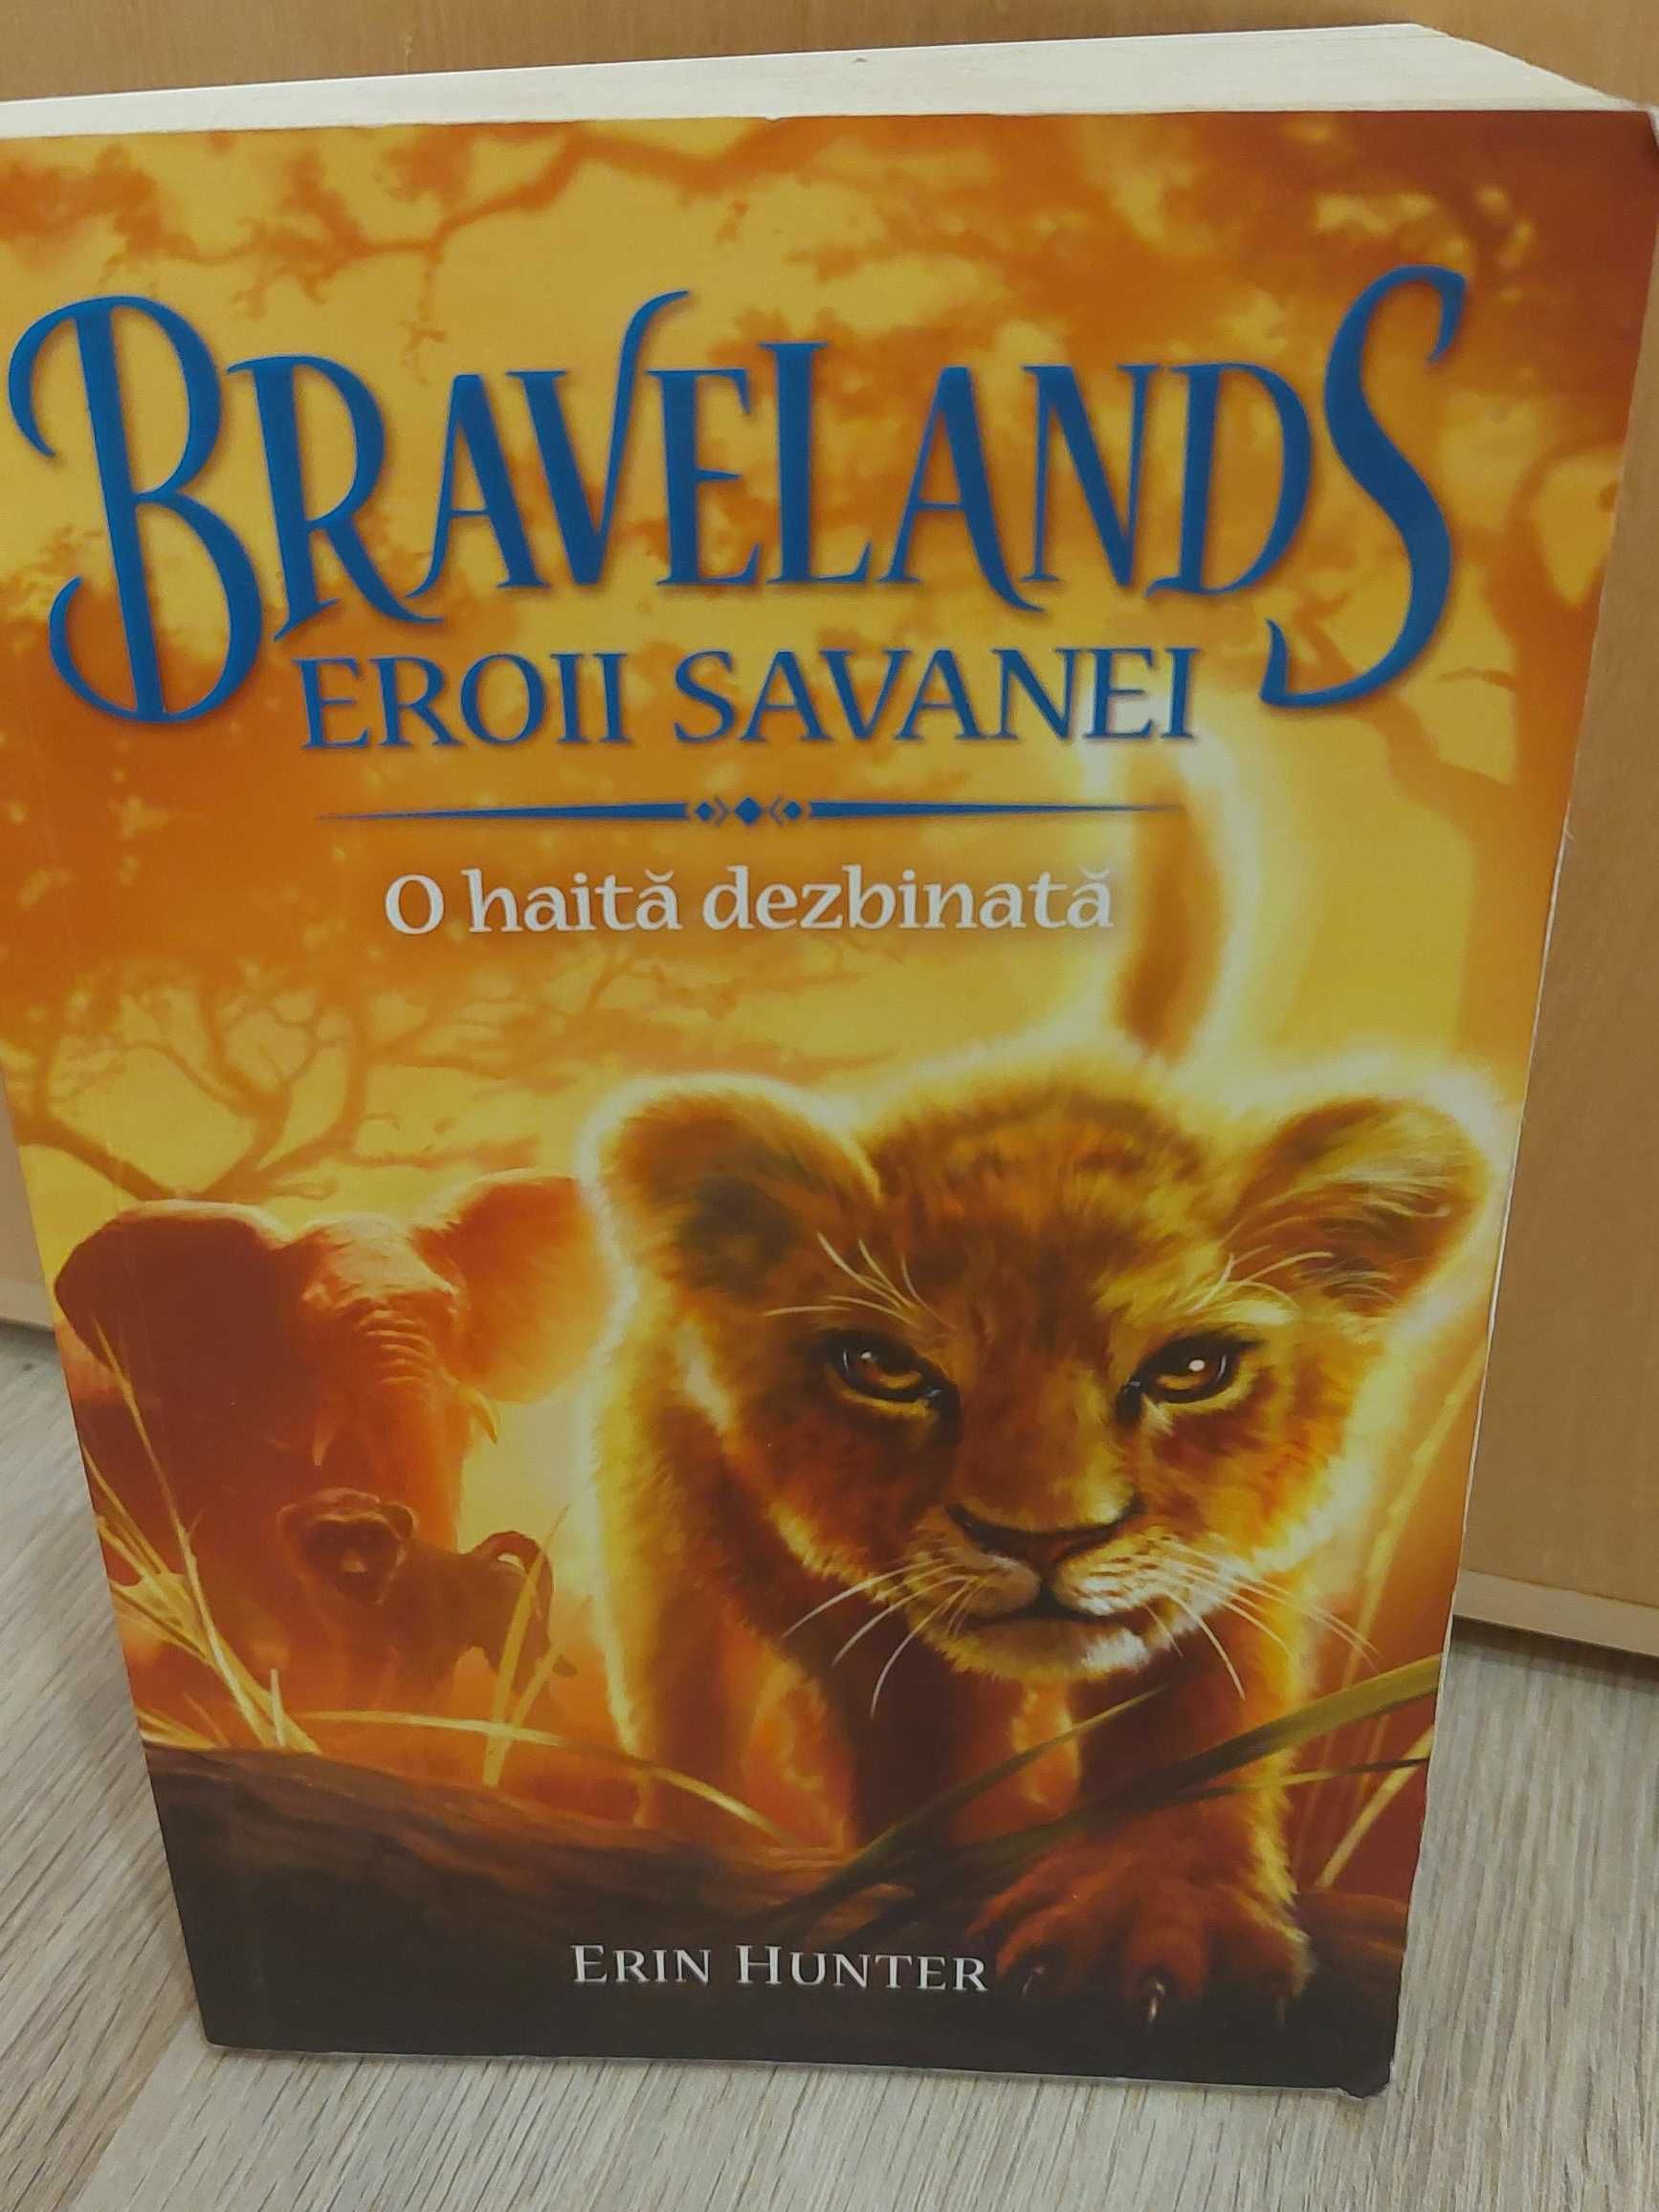 Bravelands. Eroii savanei - 3 vol